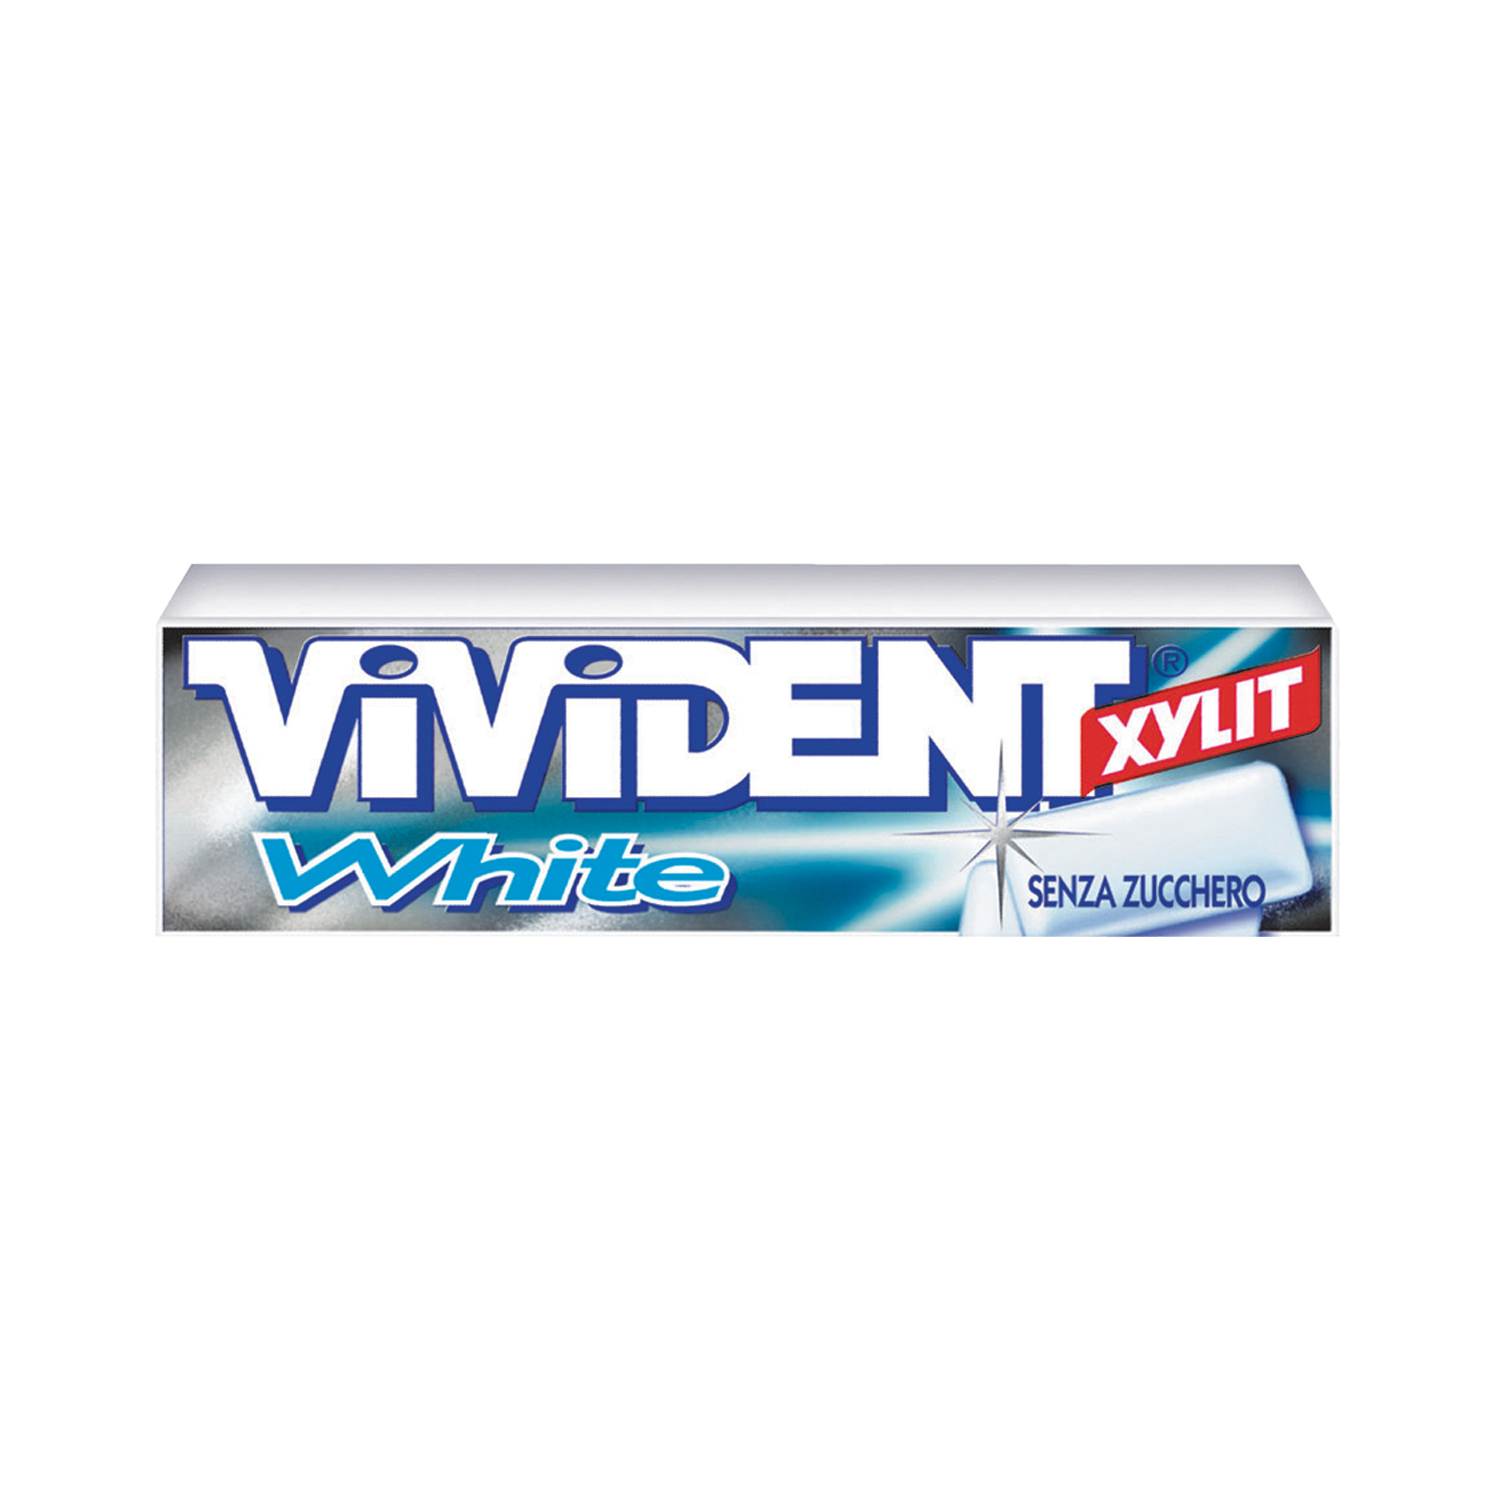 VIVIDENT Xylit White Stick